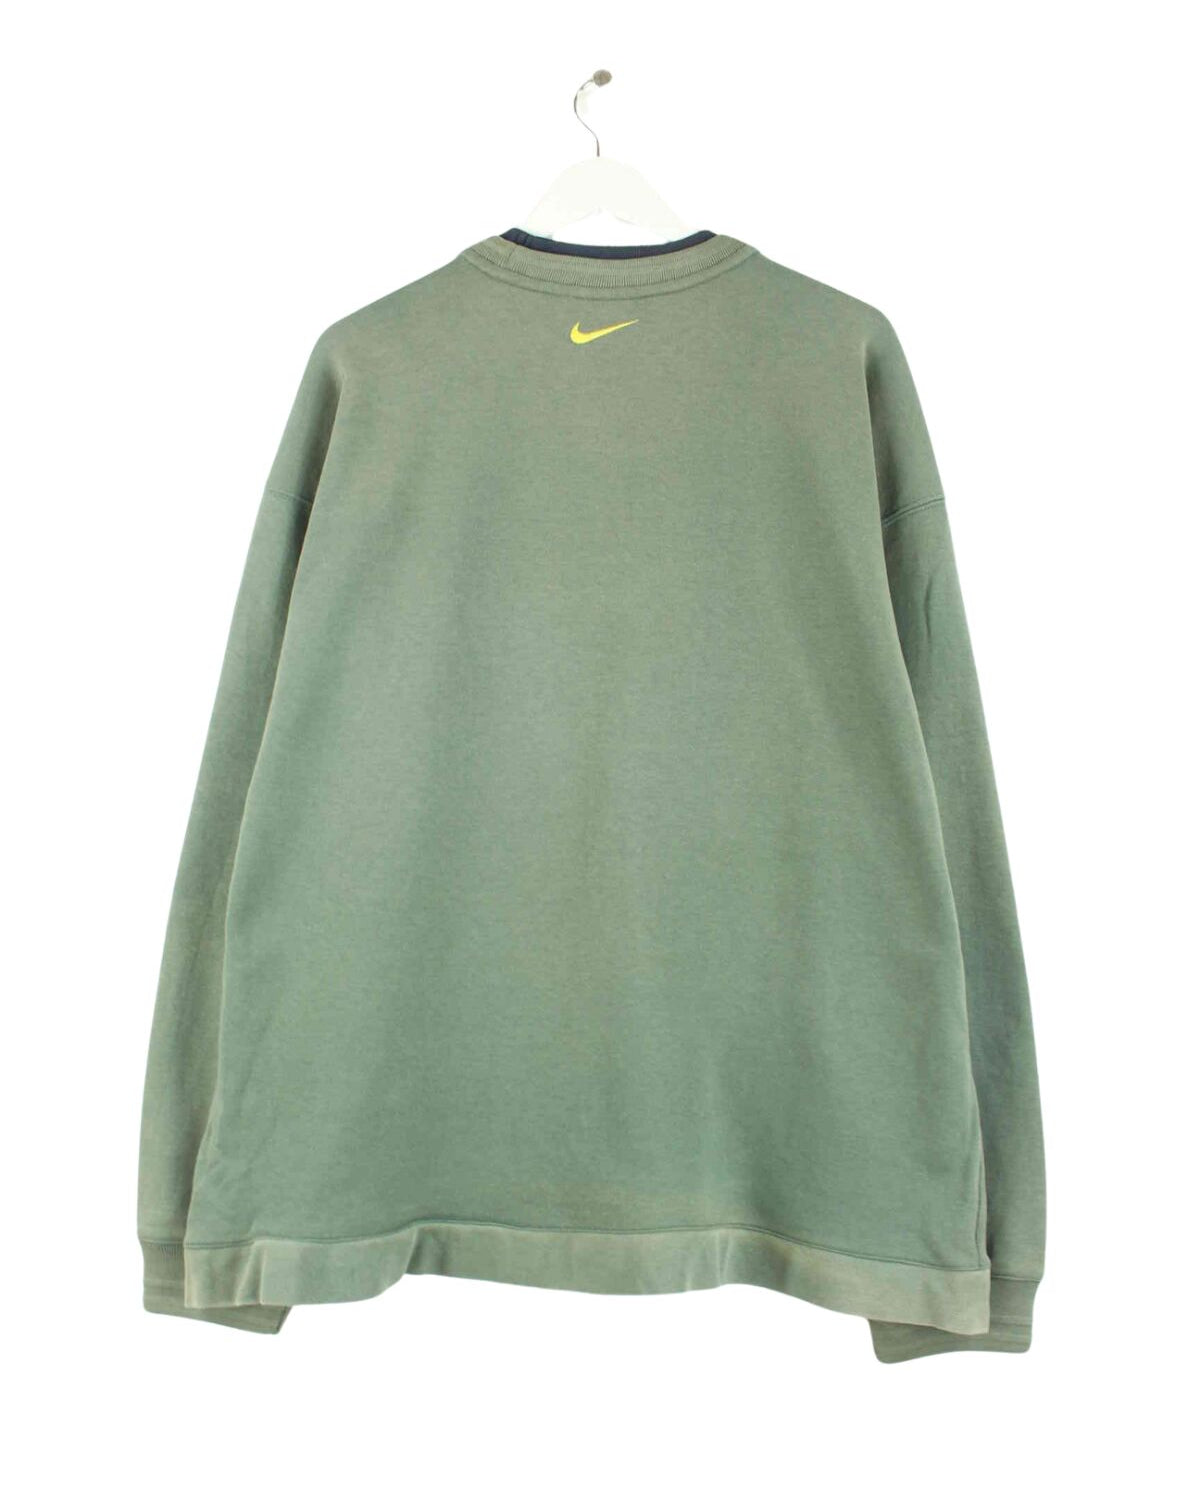 Nike 90s Vintage Embroidered Sweater Grün XL (back image)